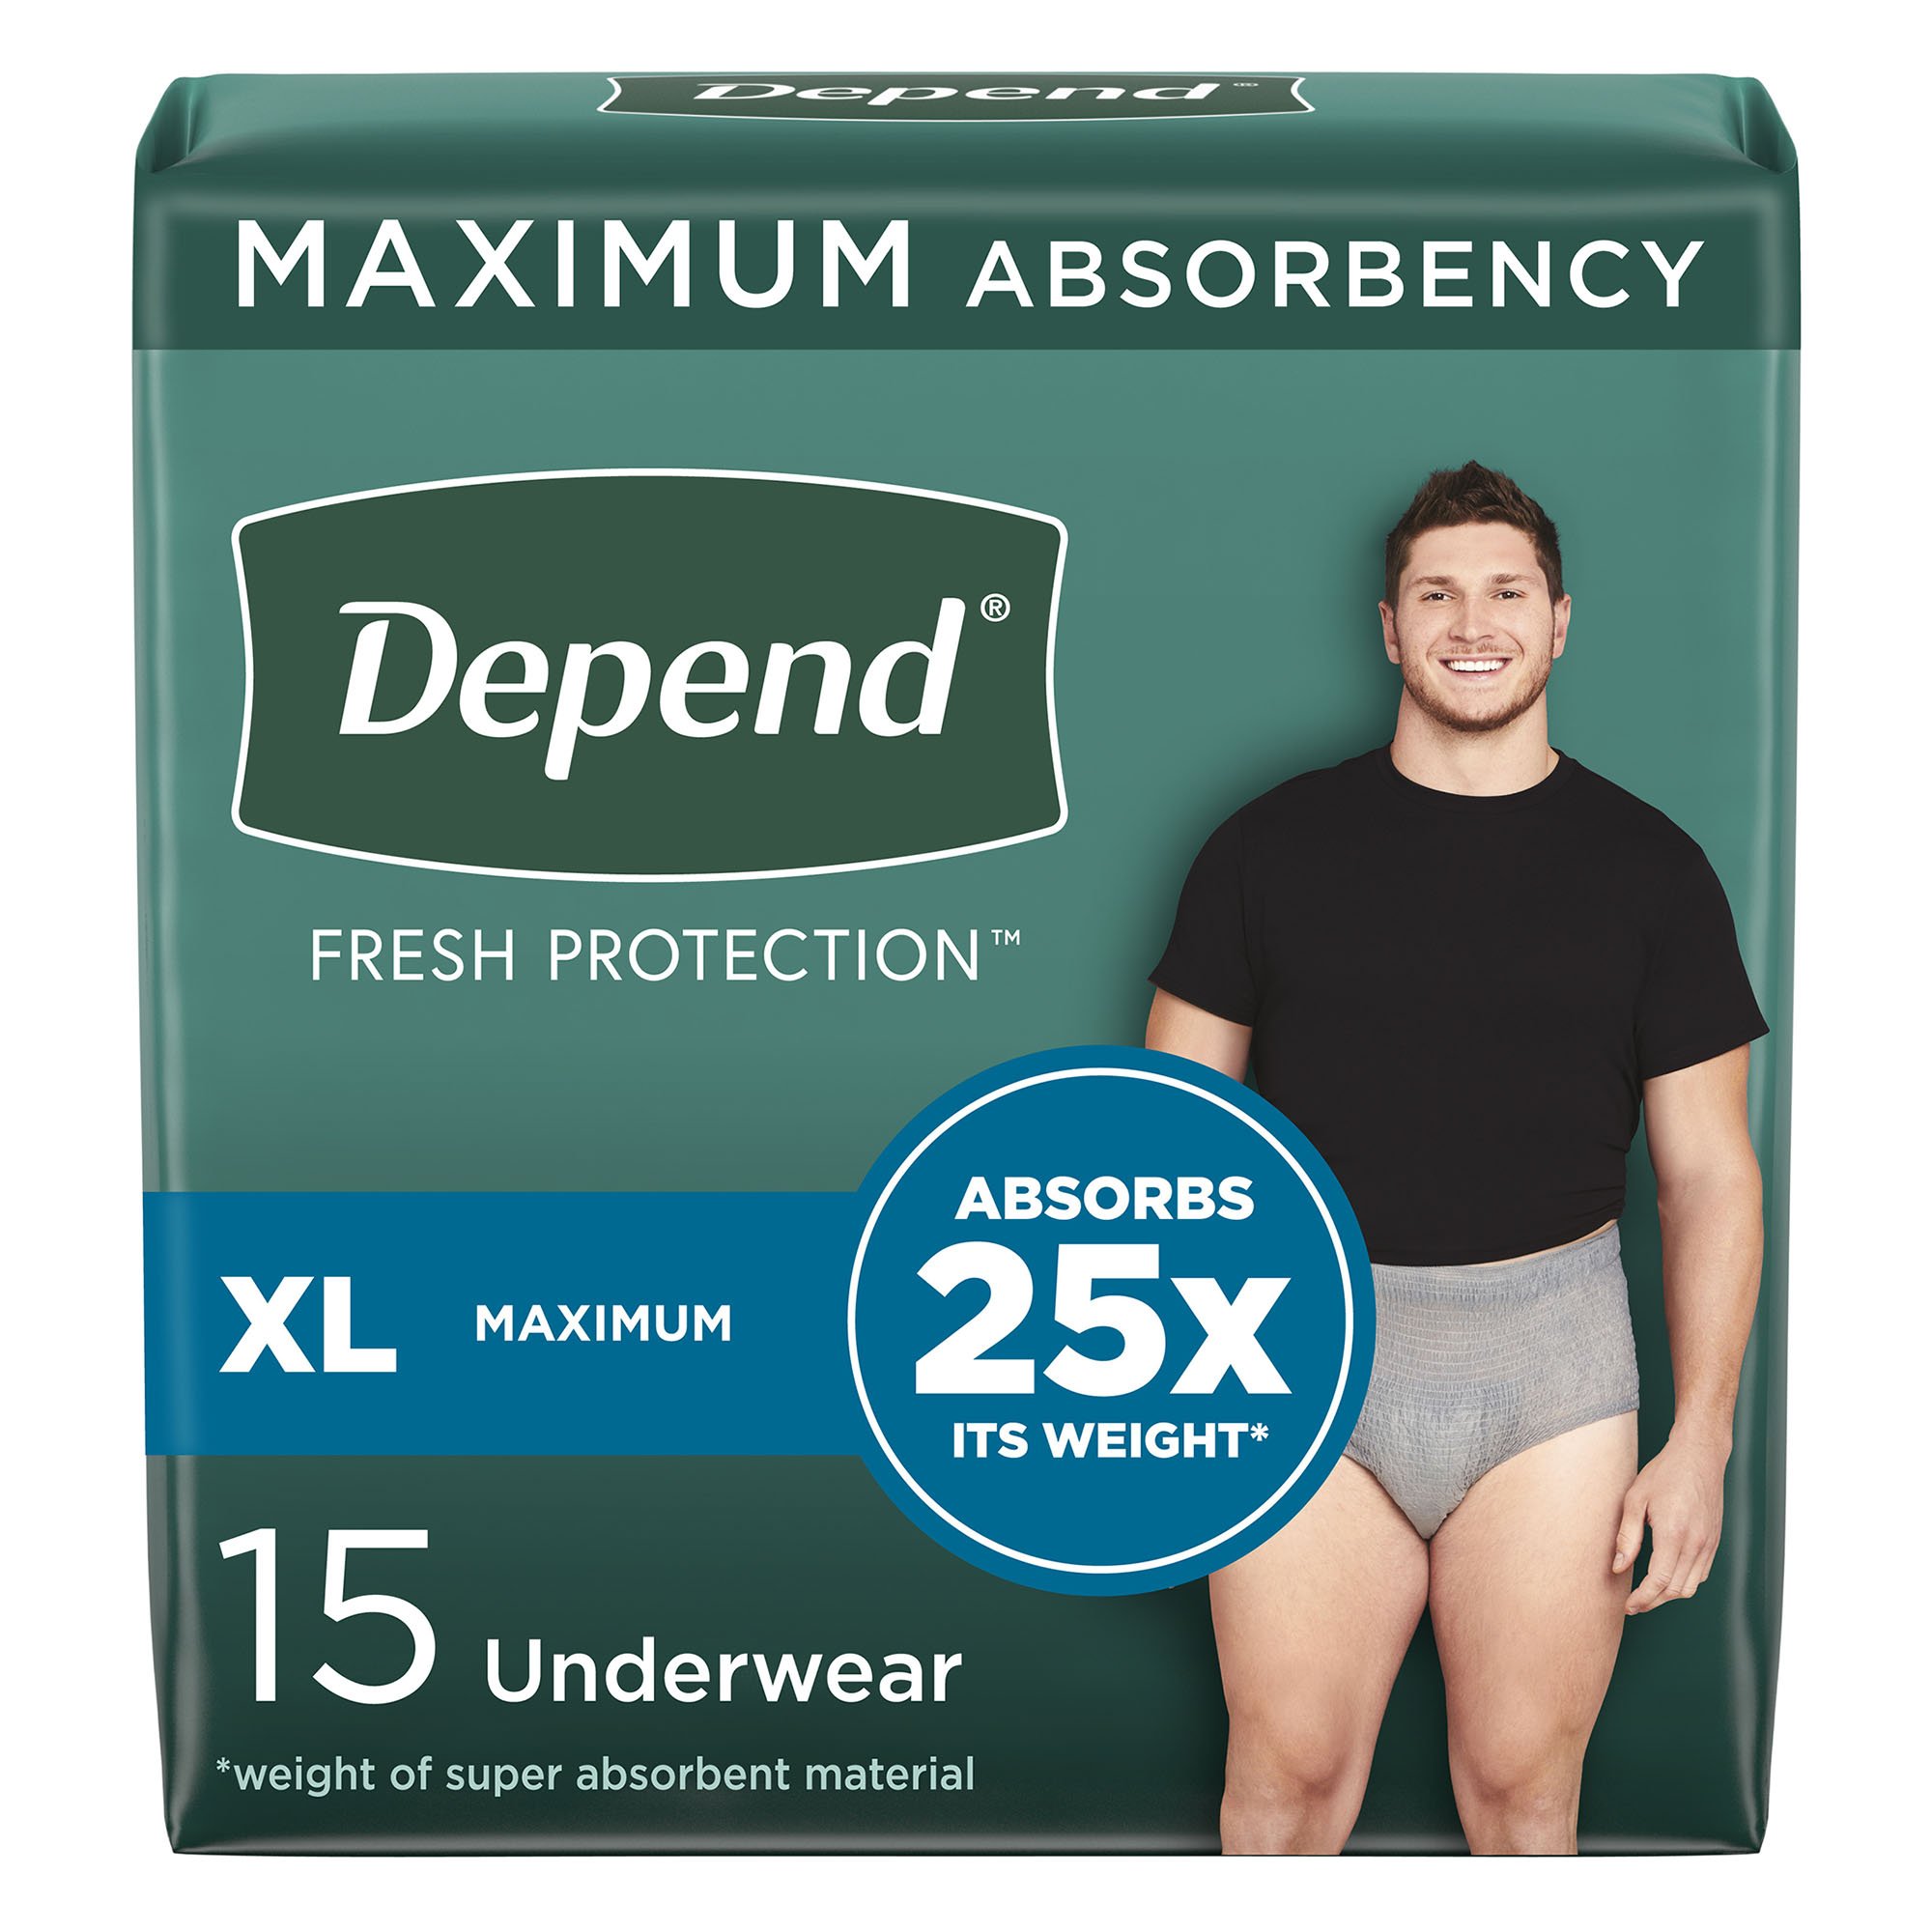 TENA ProSkin Overnight Incontinence Underwear, Super Absorbency